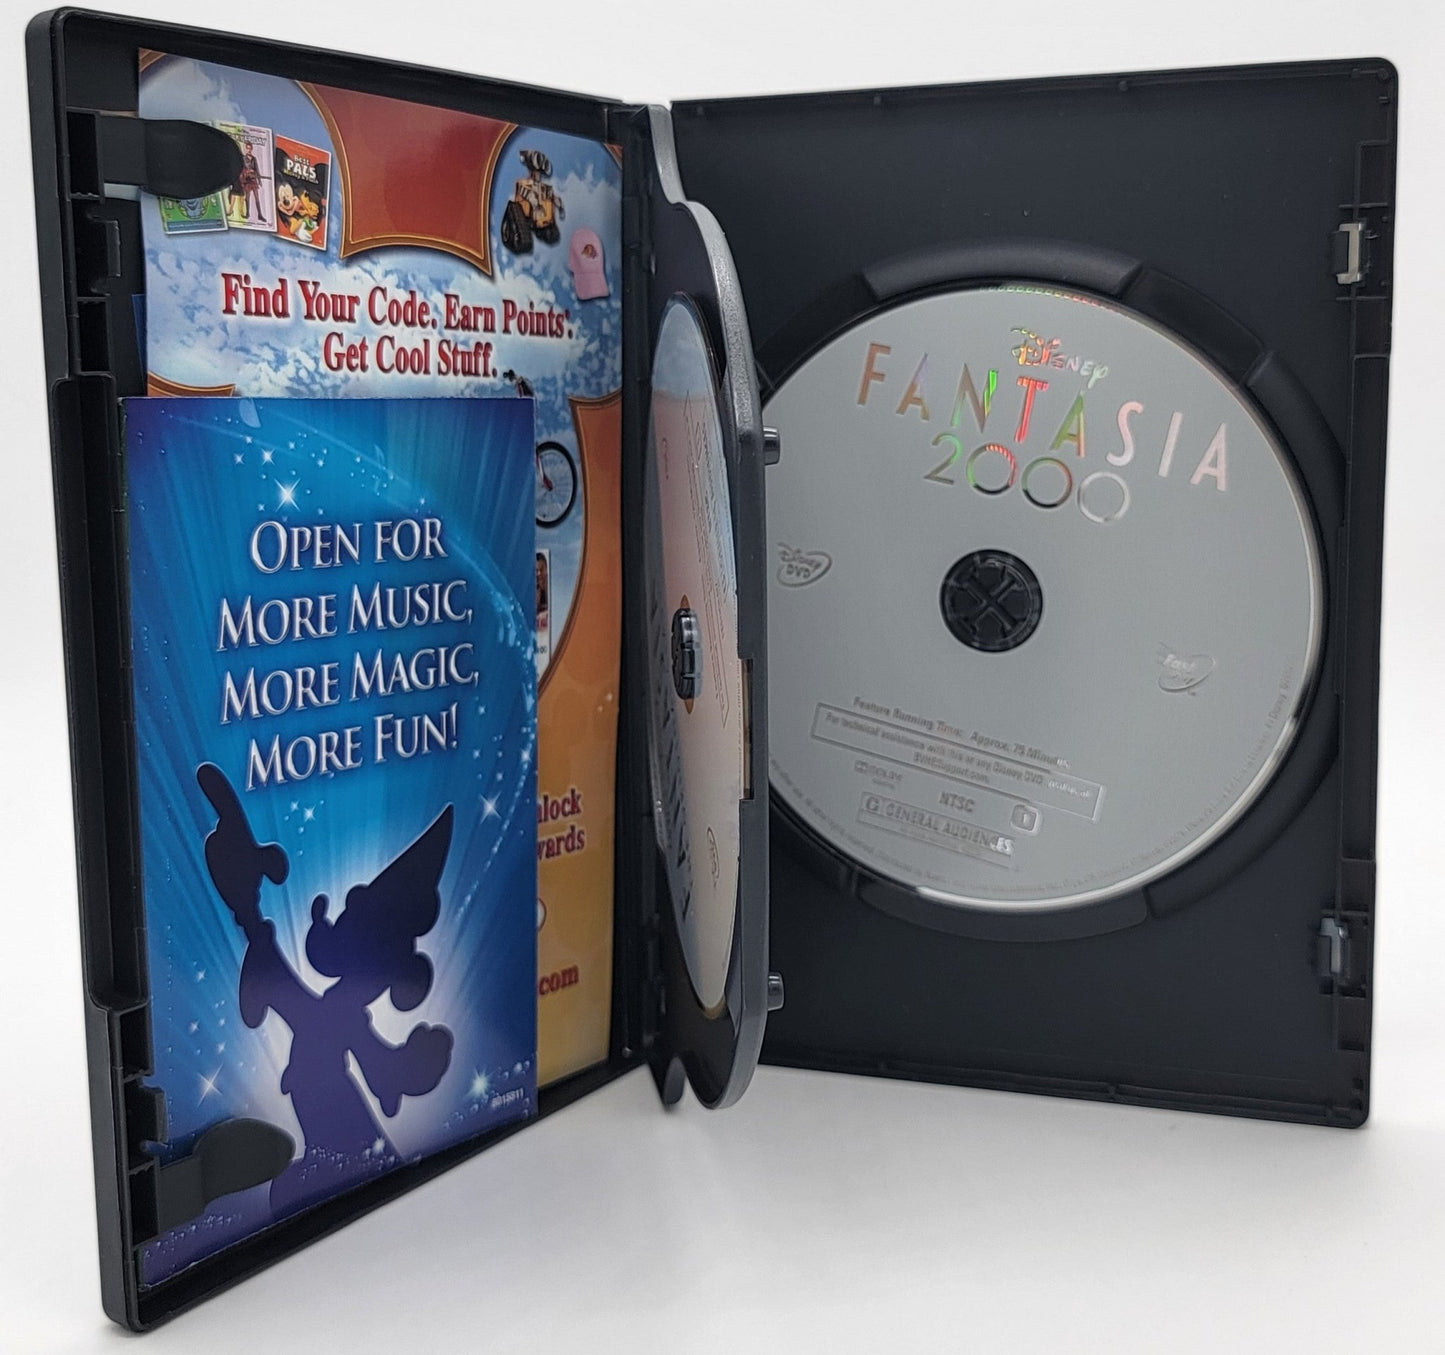 Walt Disney Studios Home Entertainment - Fantasia Fantasia 2000 | 2 Disc Special Edition | DVD - DVD - Steady Bunny Shop